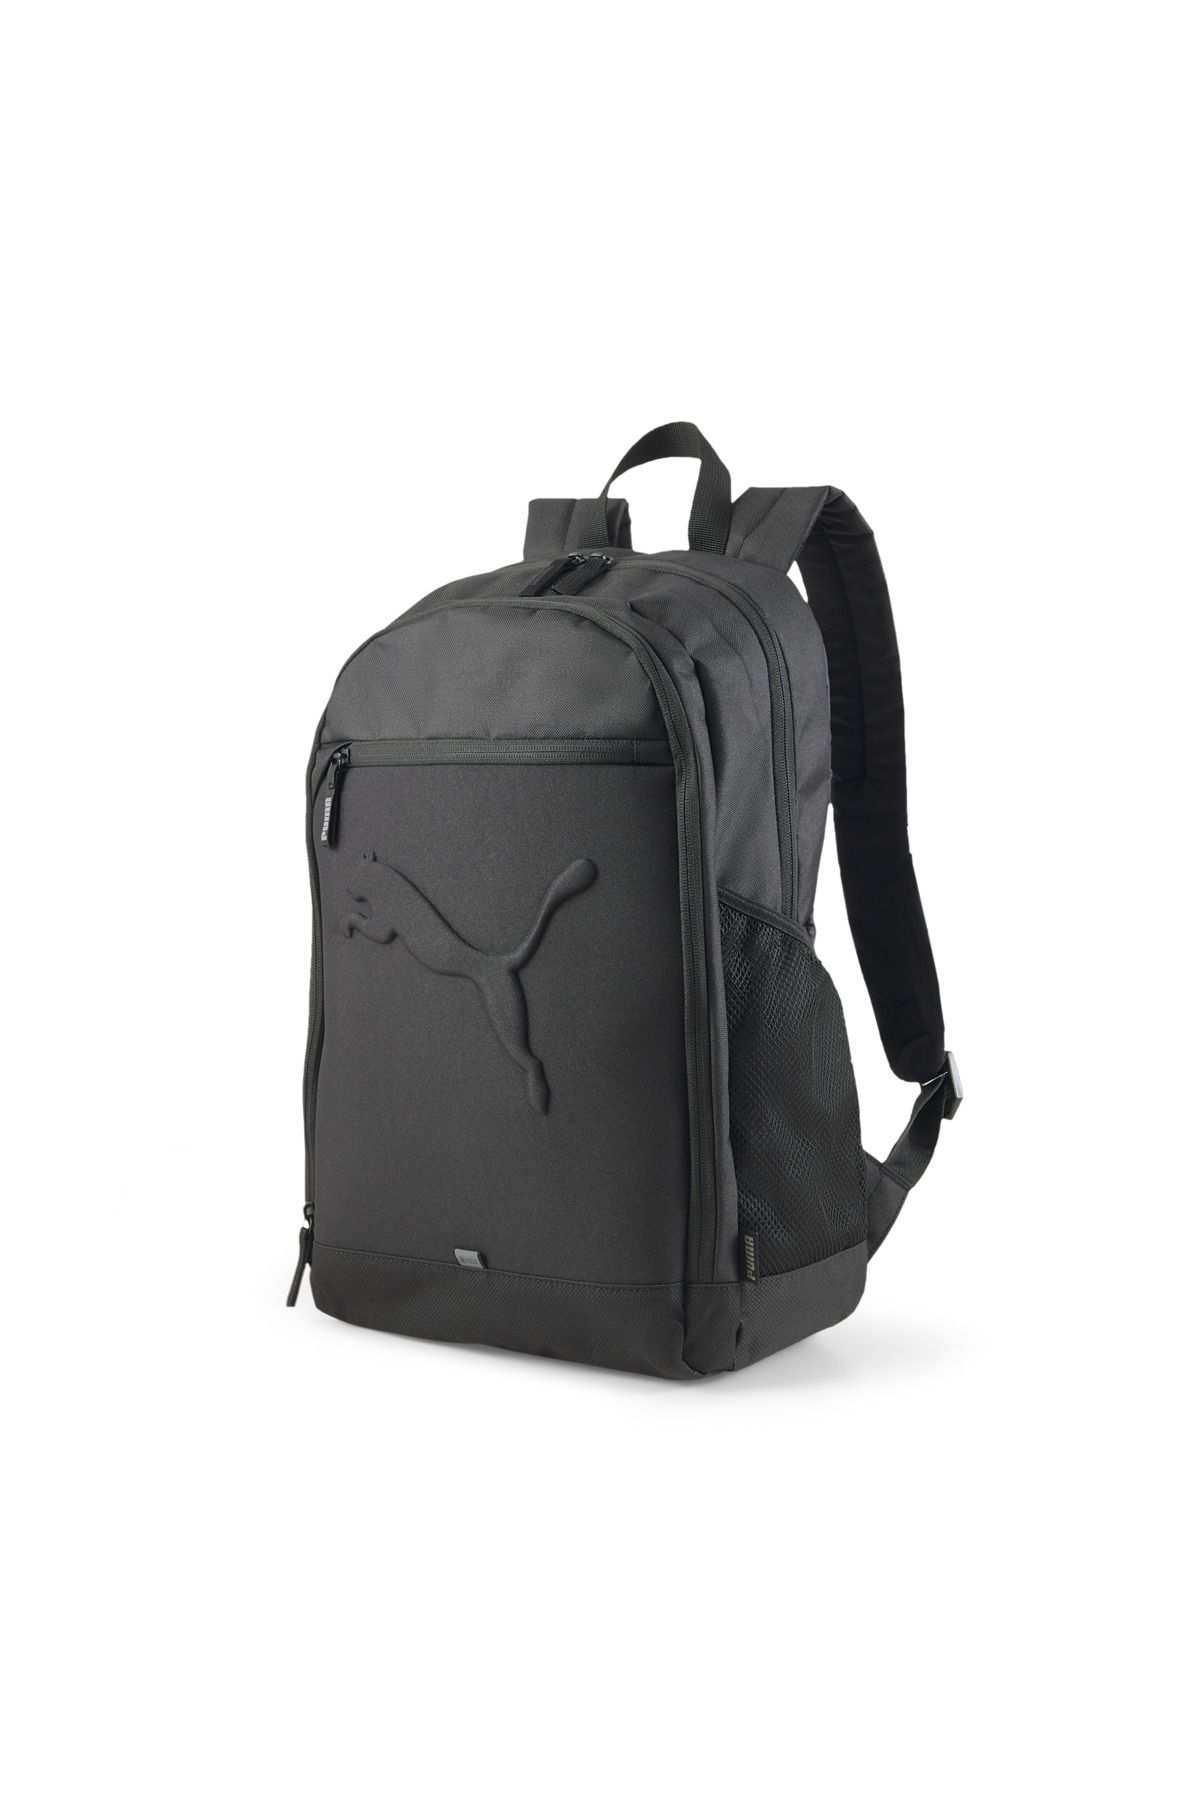 Puma Buzz Backpack07913601